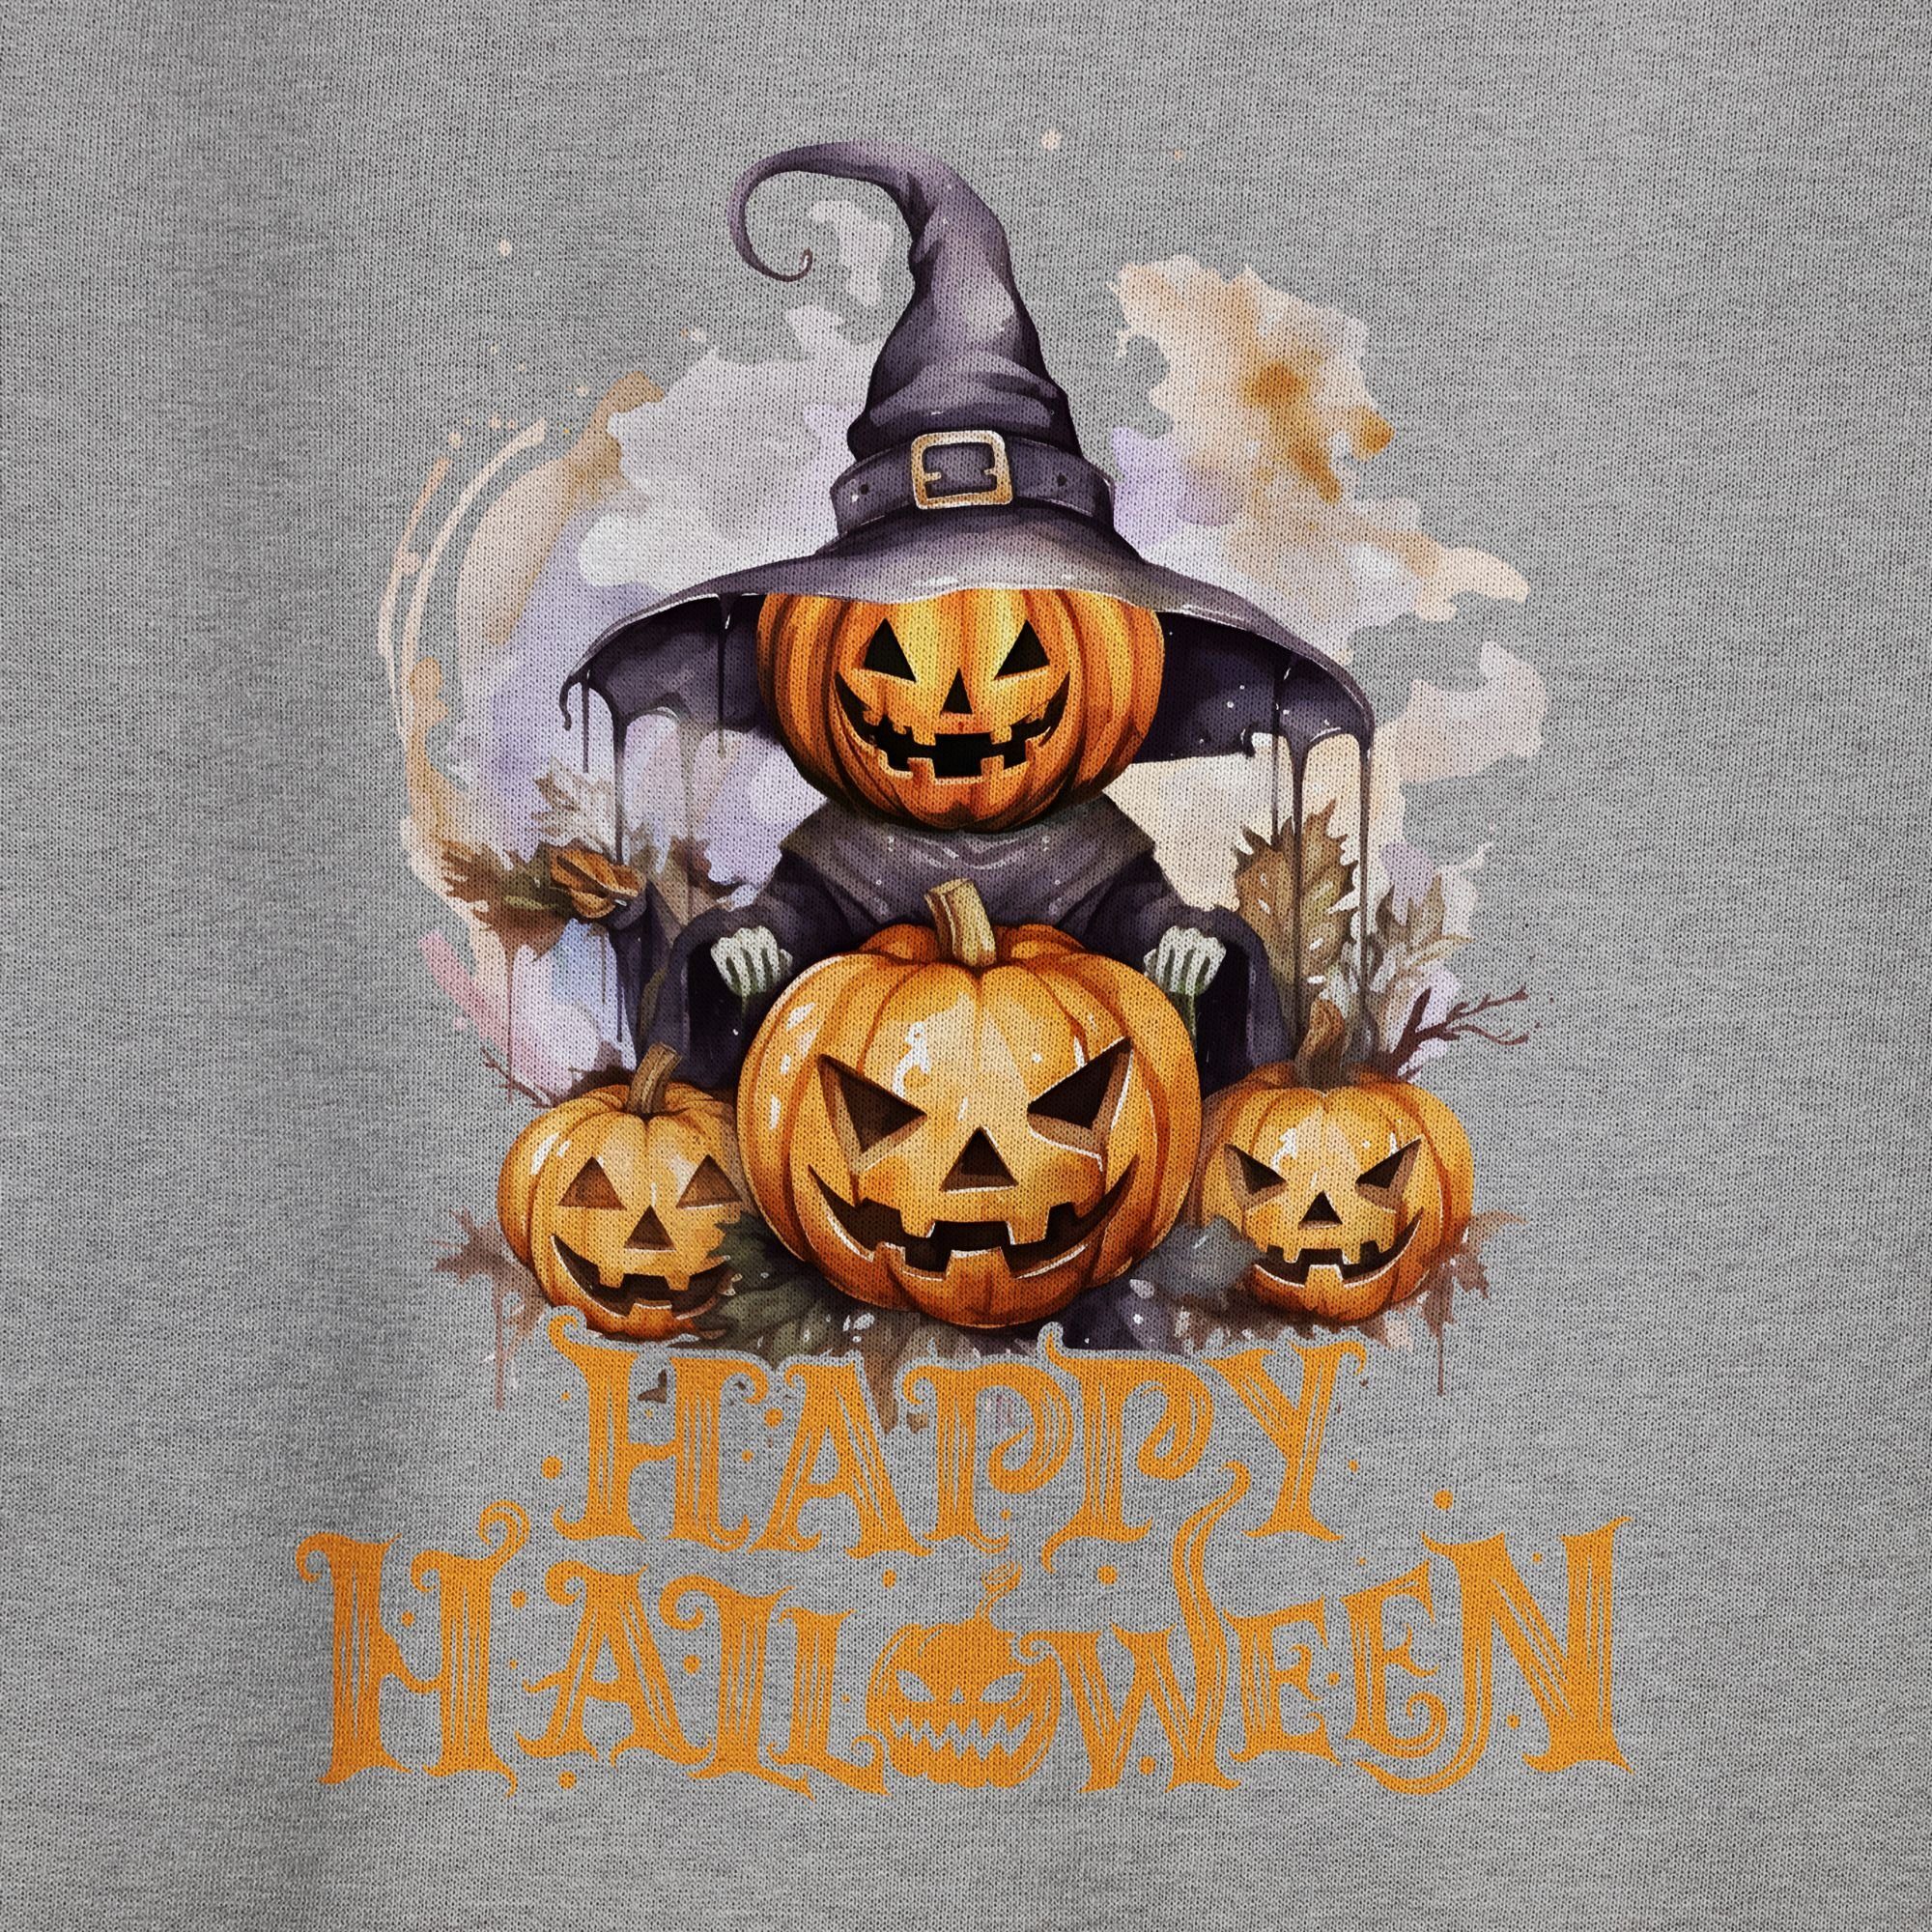 Shirtracer Sweatshirt Happy Halloween Kürbis Grau Damen Hexe Kürbiskopf Gruselig Kostüme 2 (1-tlg) Halloween meliert